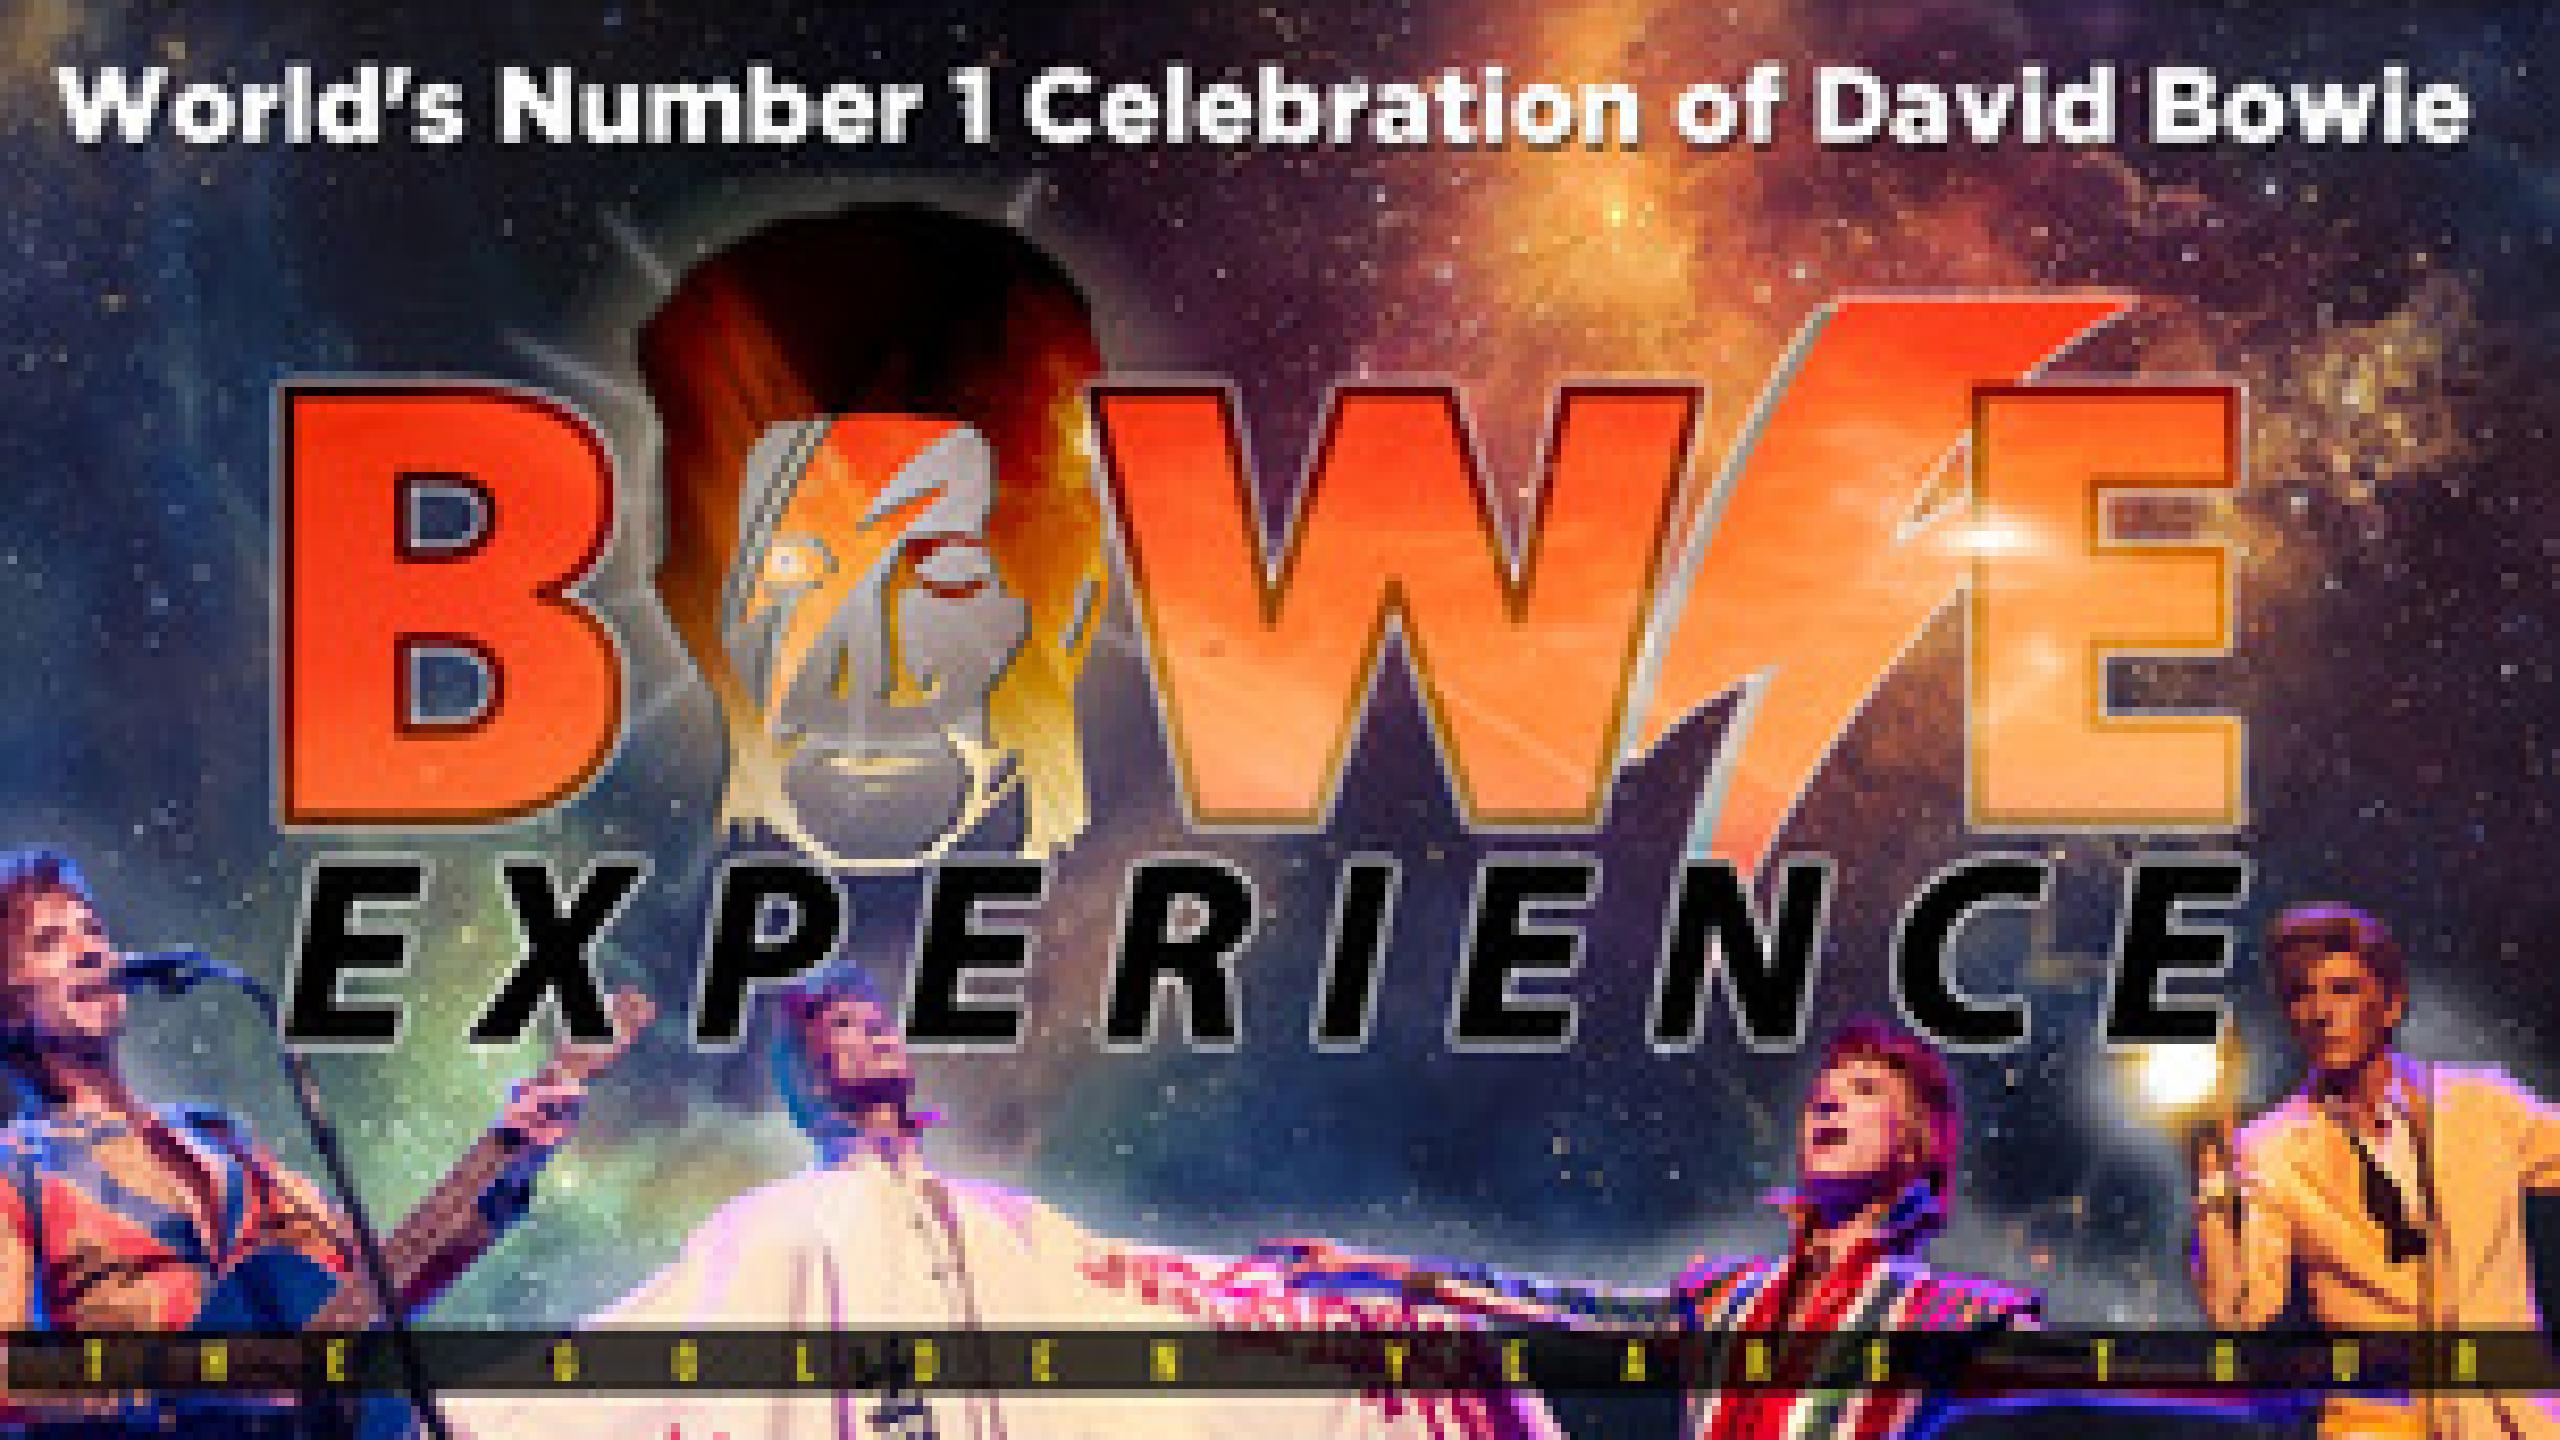 David Bowie Experience tour dates 2022 2023. David Bowie Experience